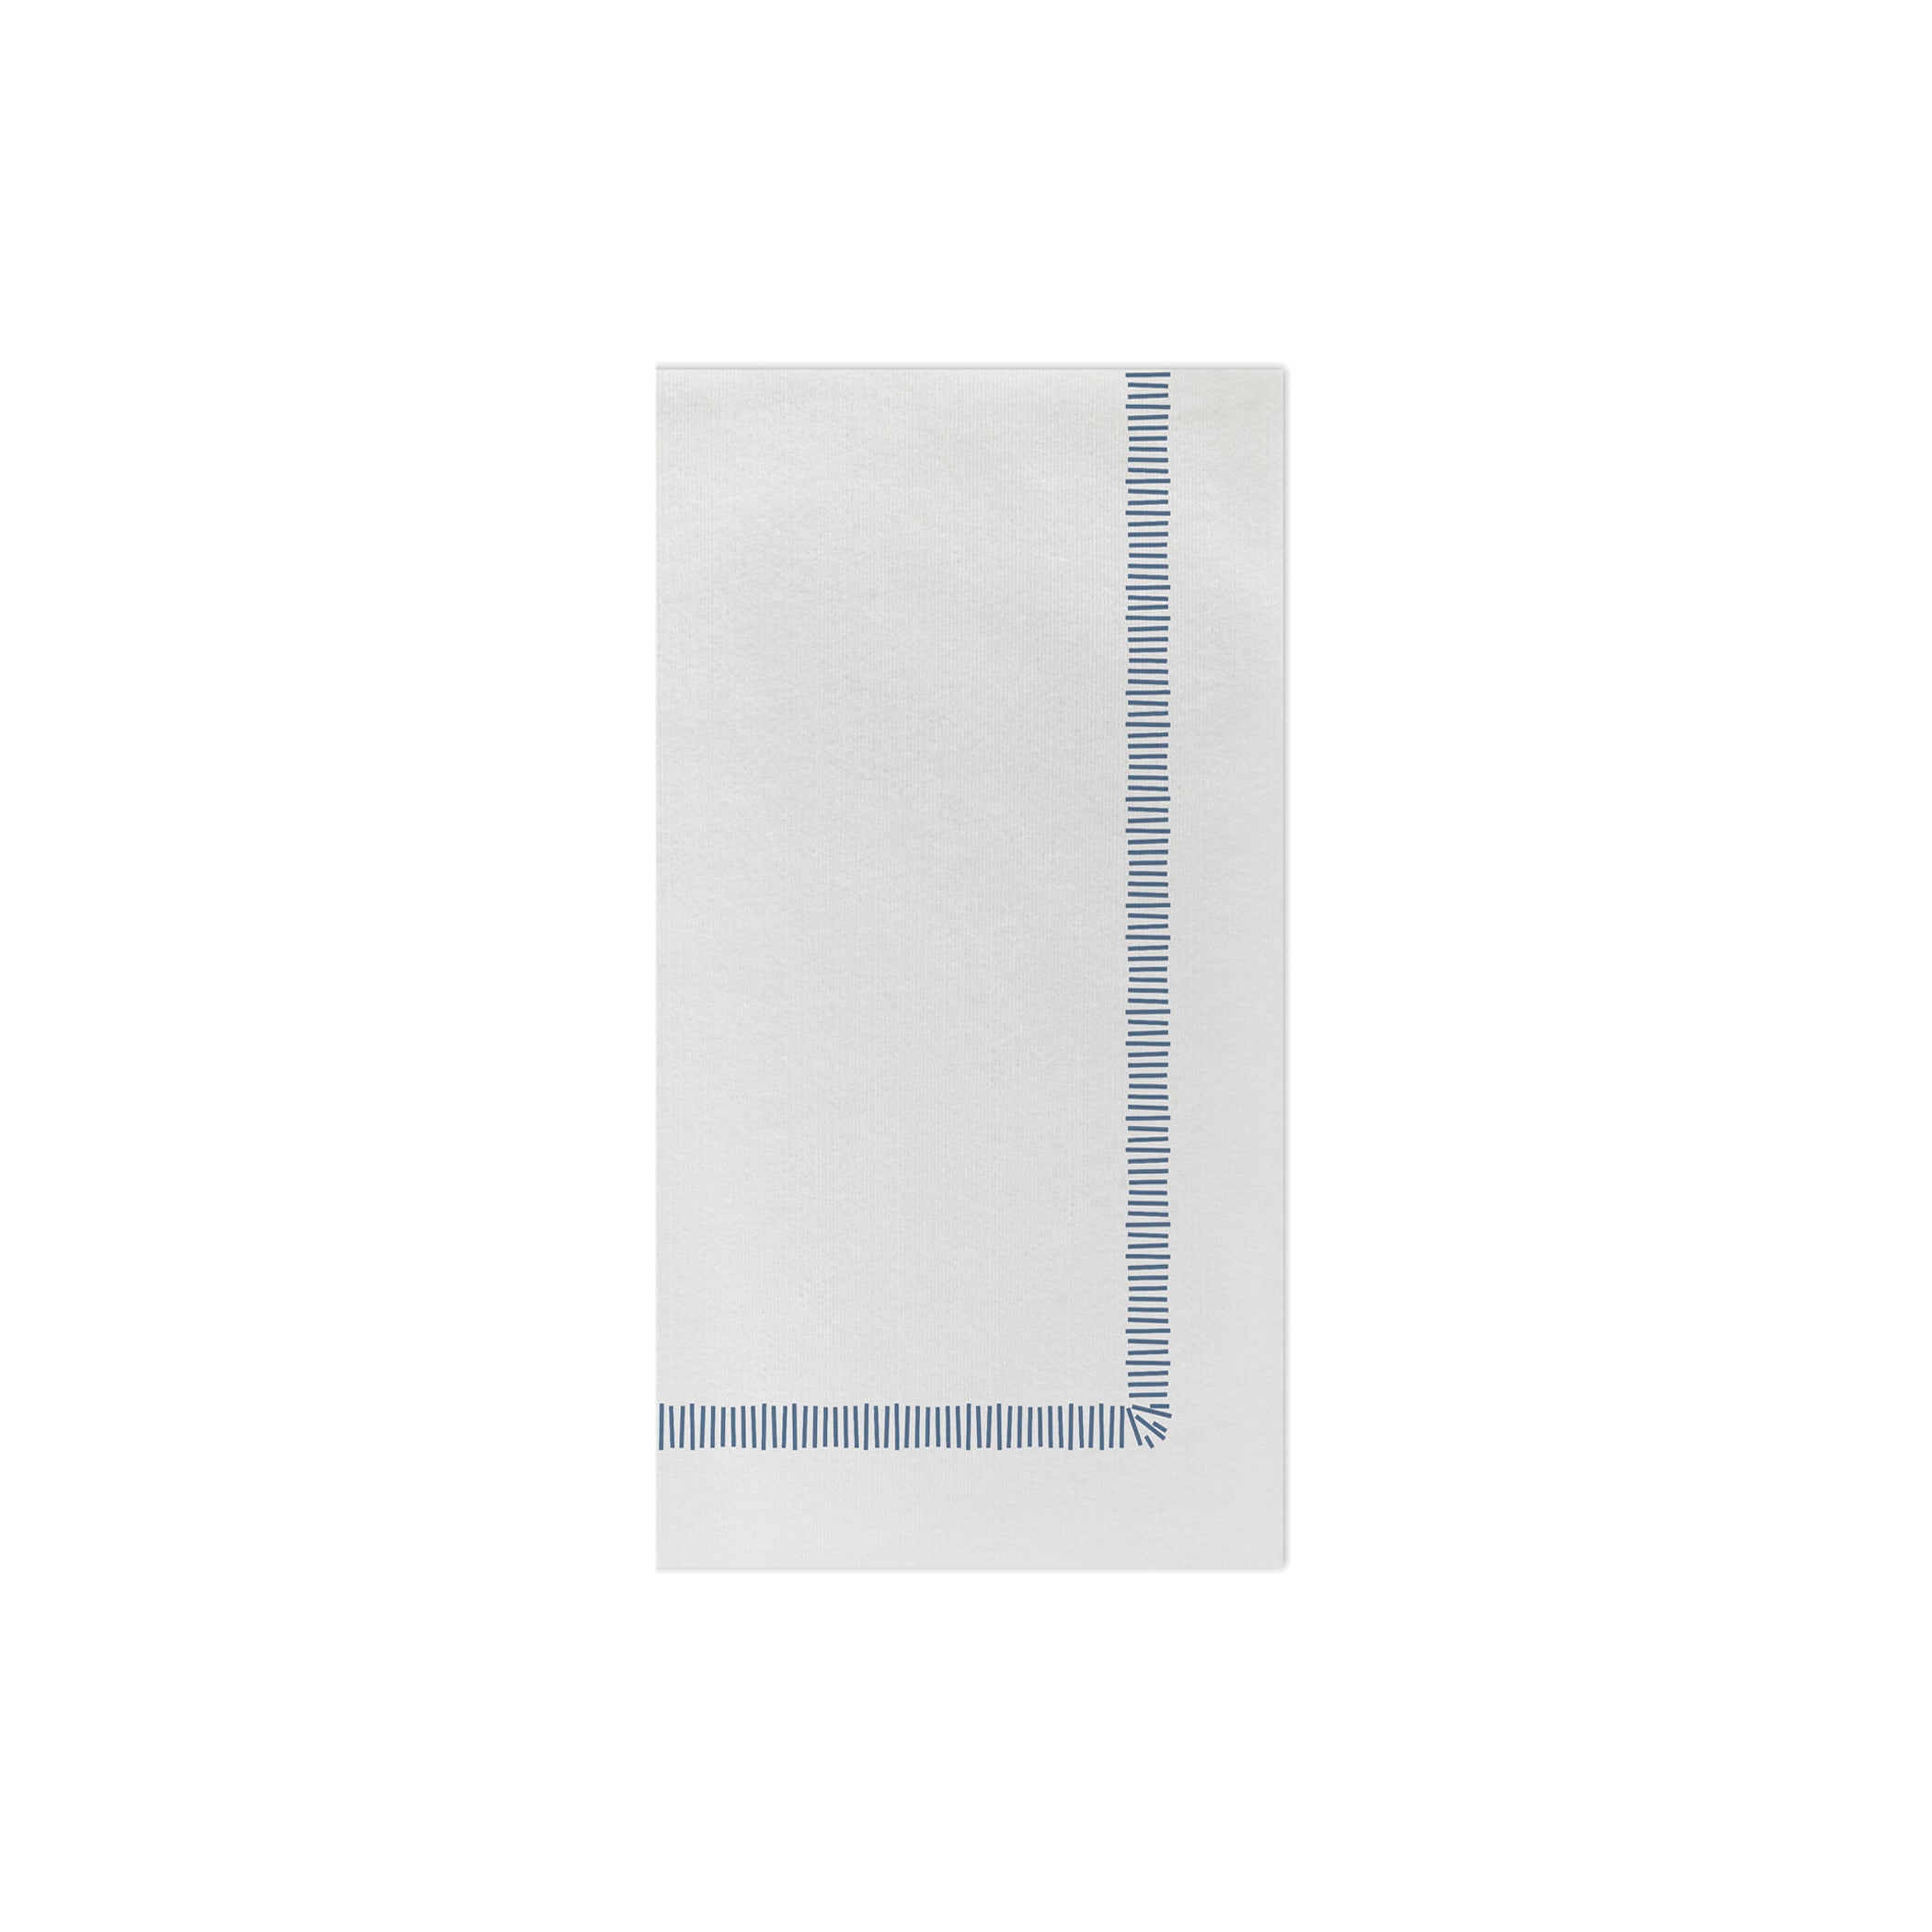 Papersoft Napkins Fringe Blue Guest Towels (Pack of 20)